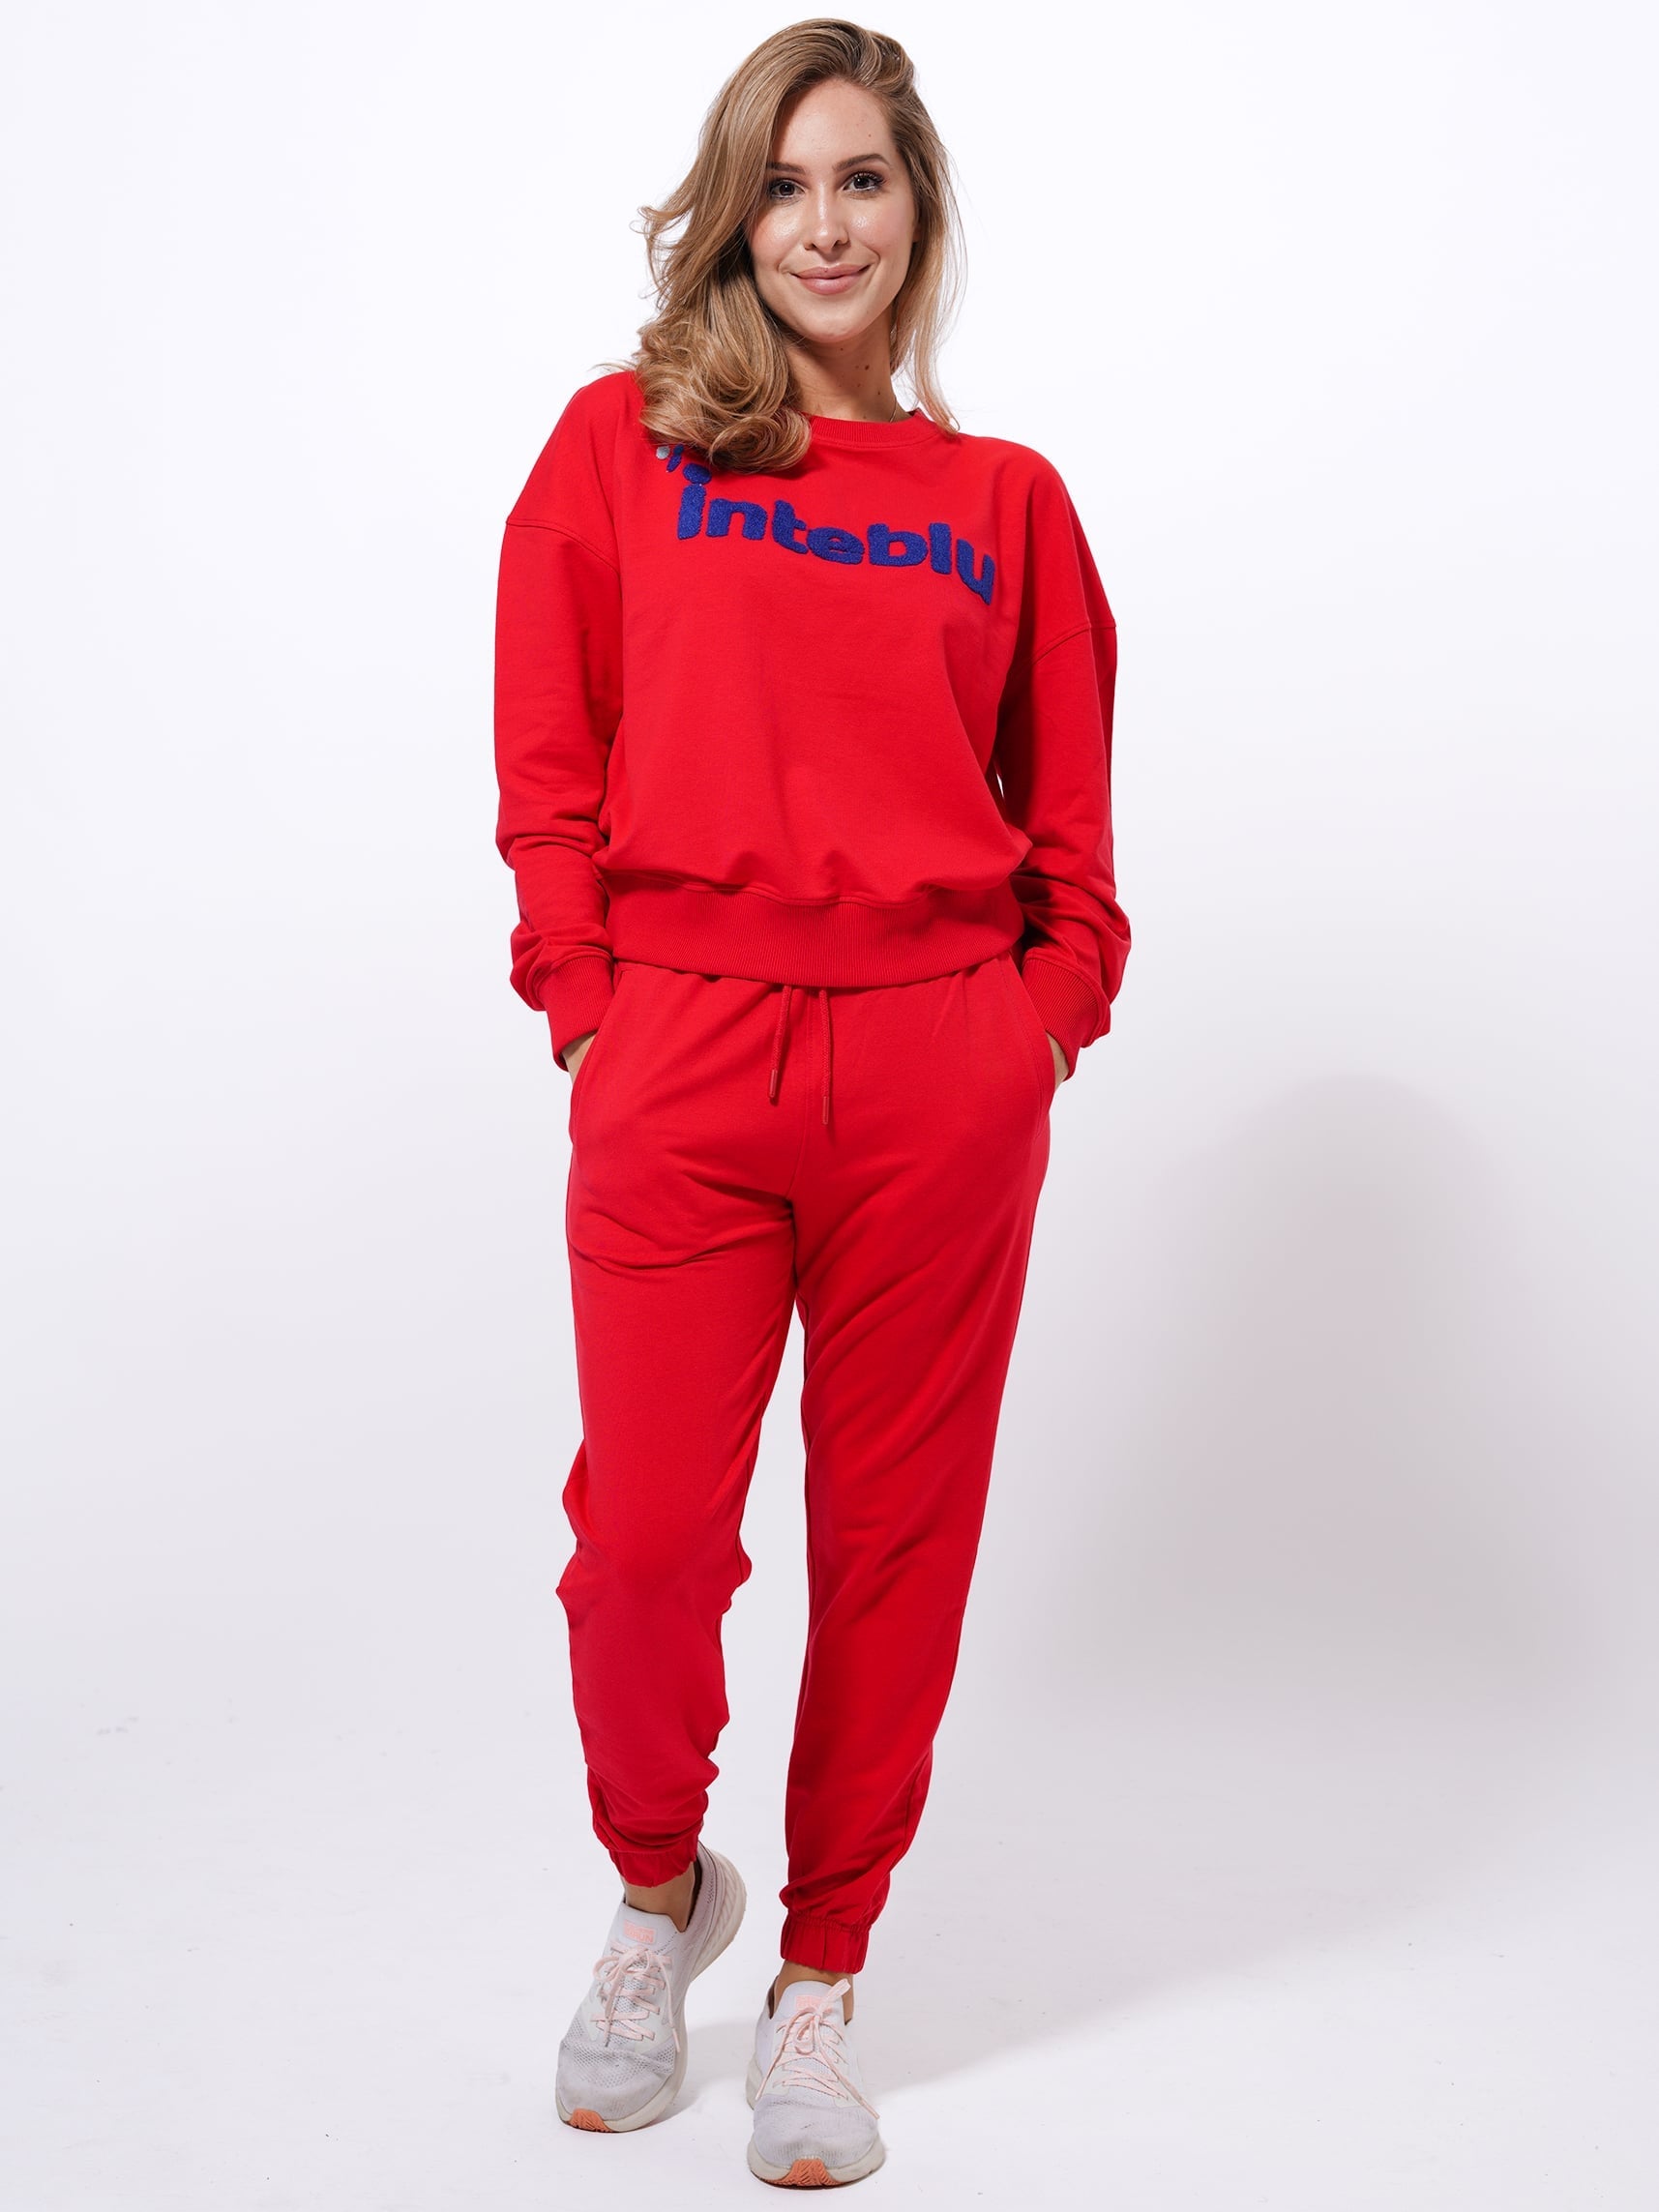 Women Sweatshirt & Joggers Set on Cotton Fabric | Red Color - inteblu